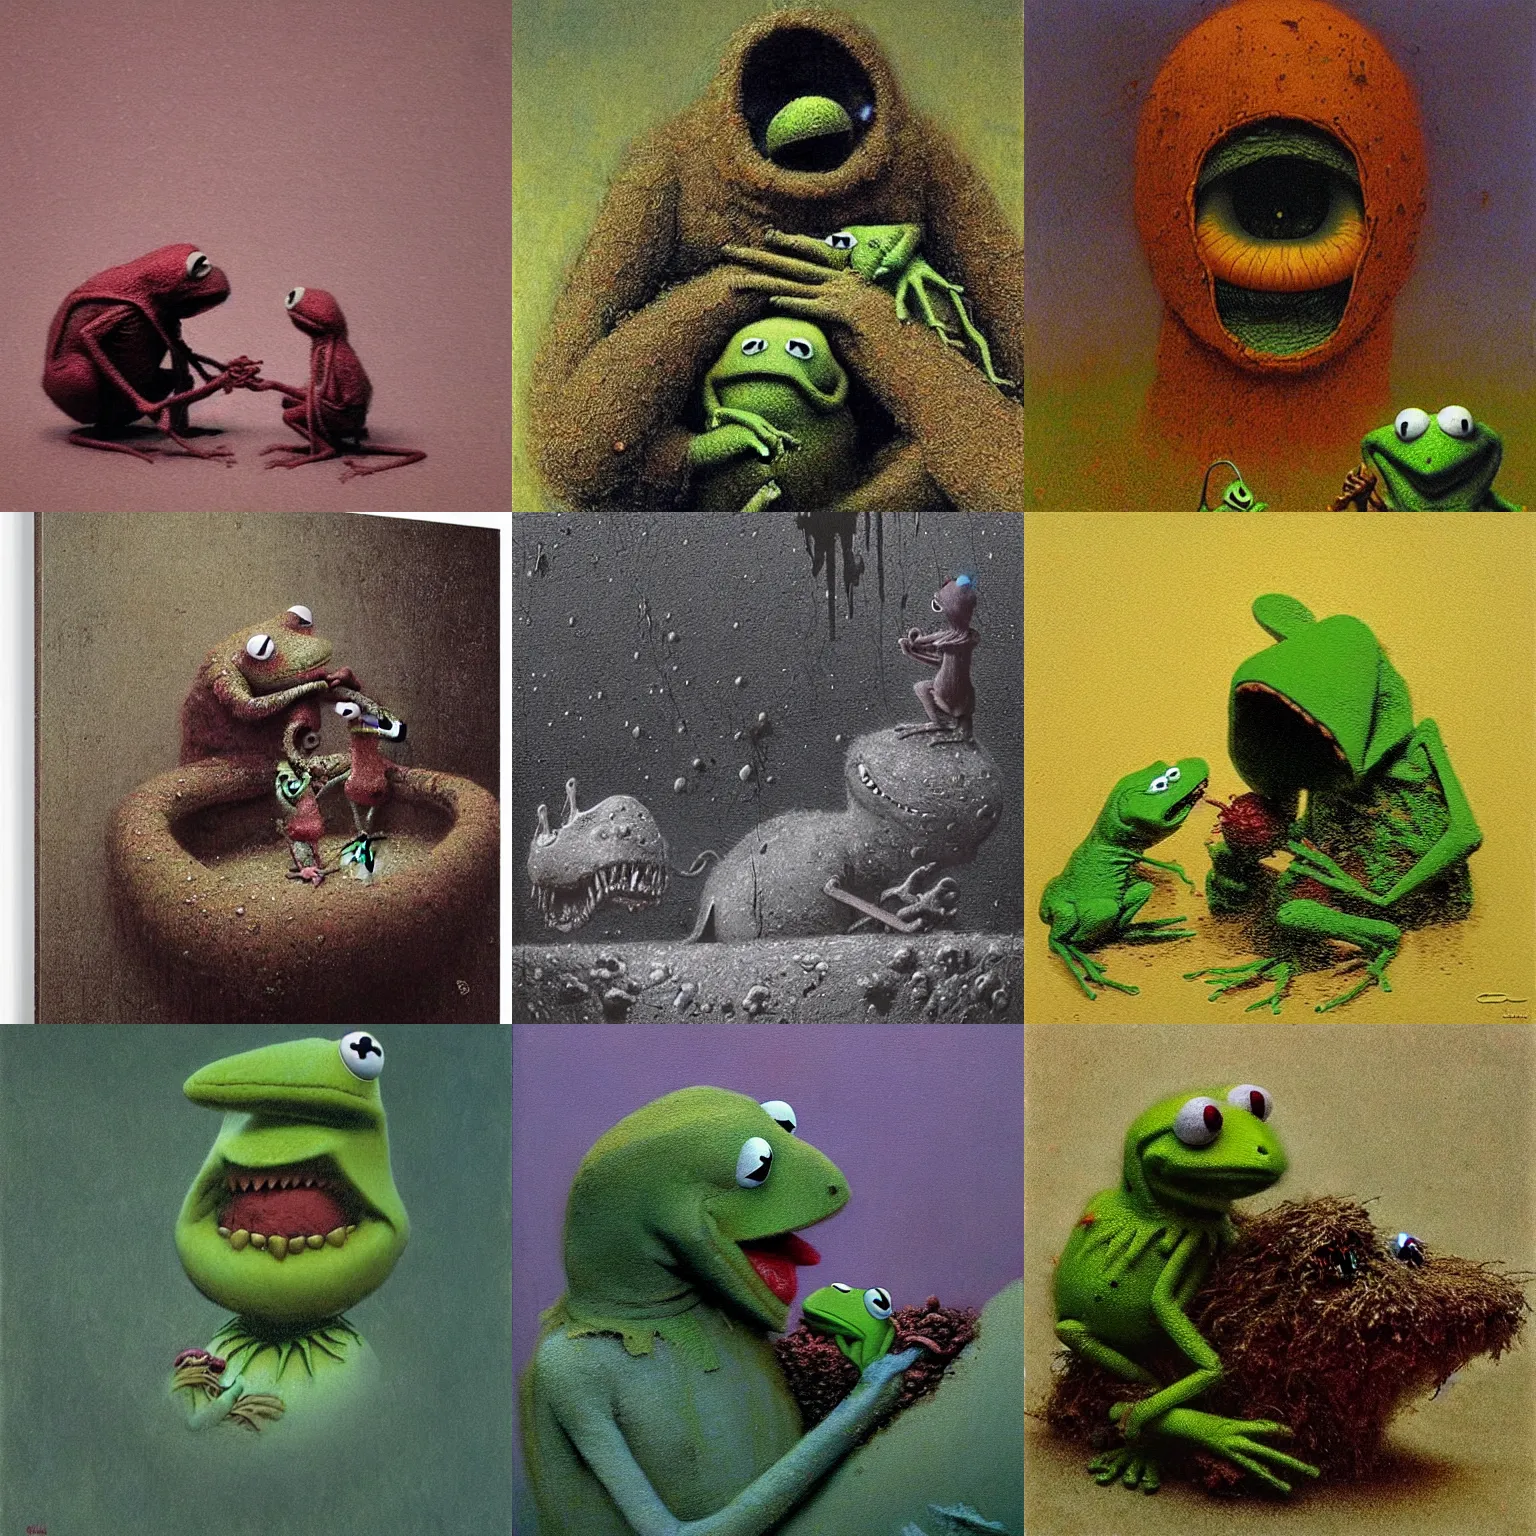 Prompt: Kermit the frog eating his son by beksinski